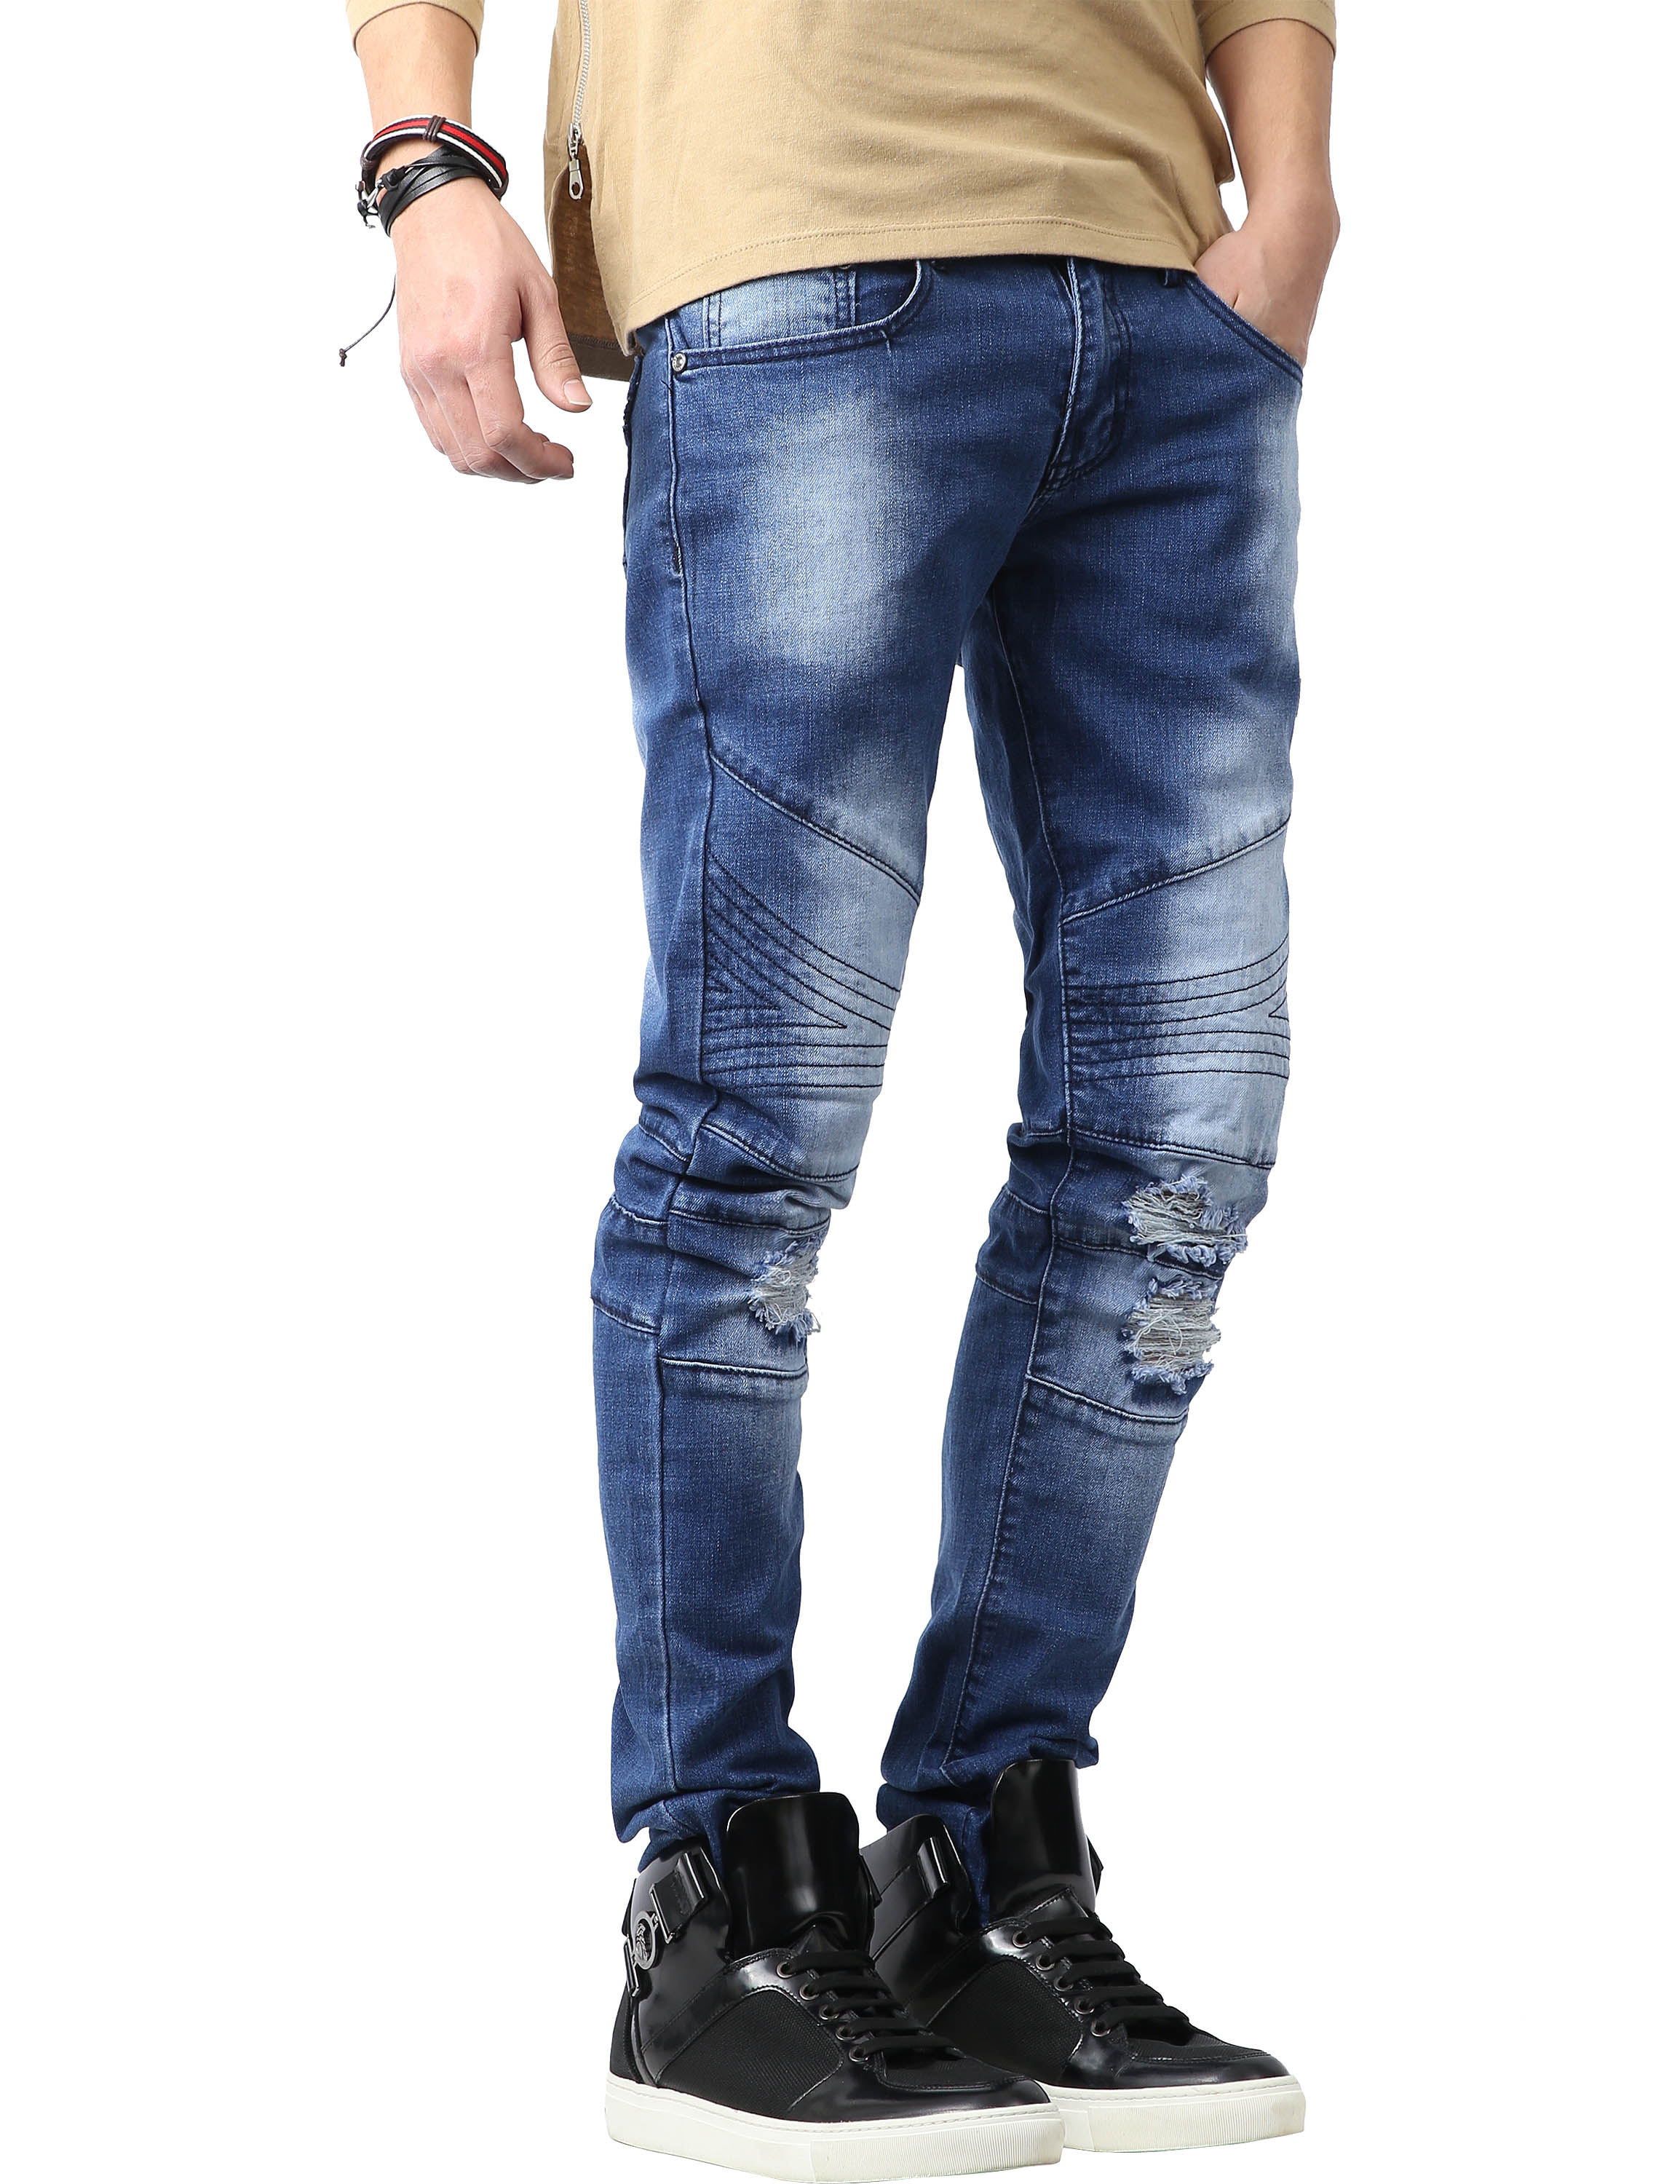 Ma Croix Mens Biker Jeans Slim Fit Distressed Ripped Zipper Stretch Denim Pants - image 1 of 6